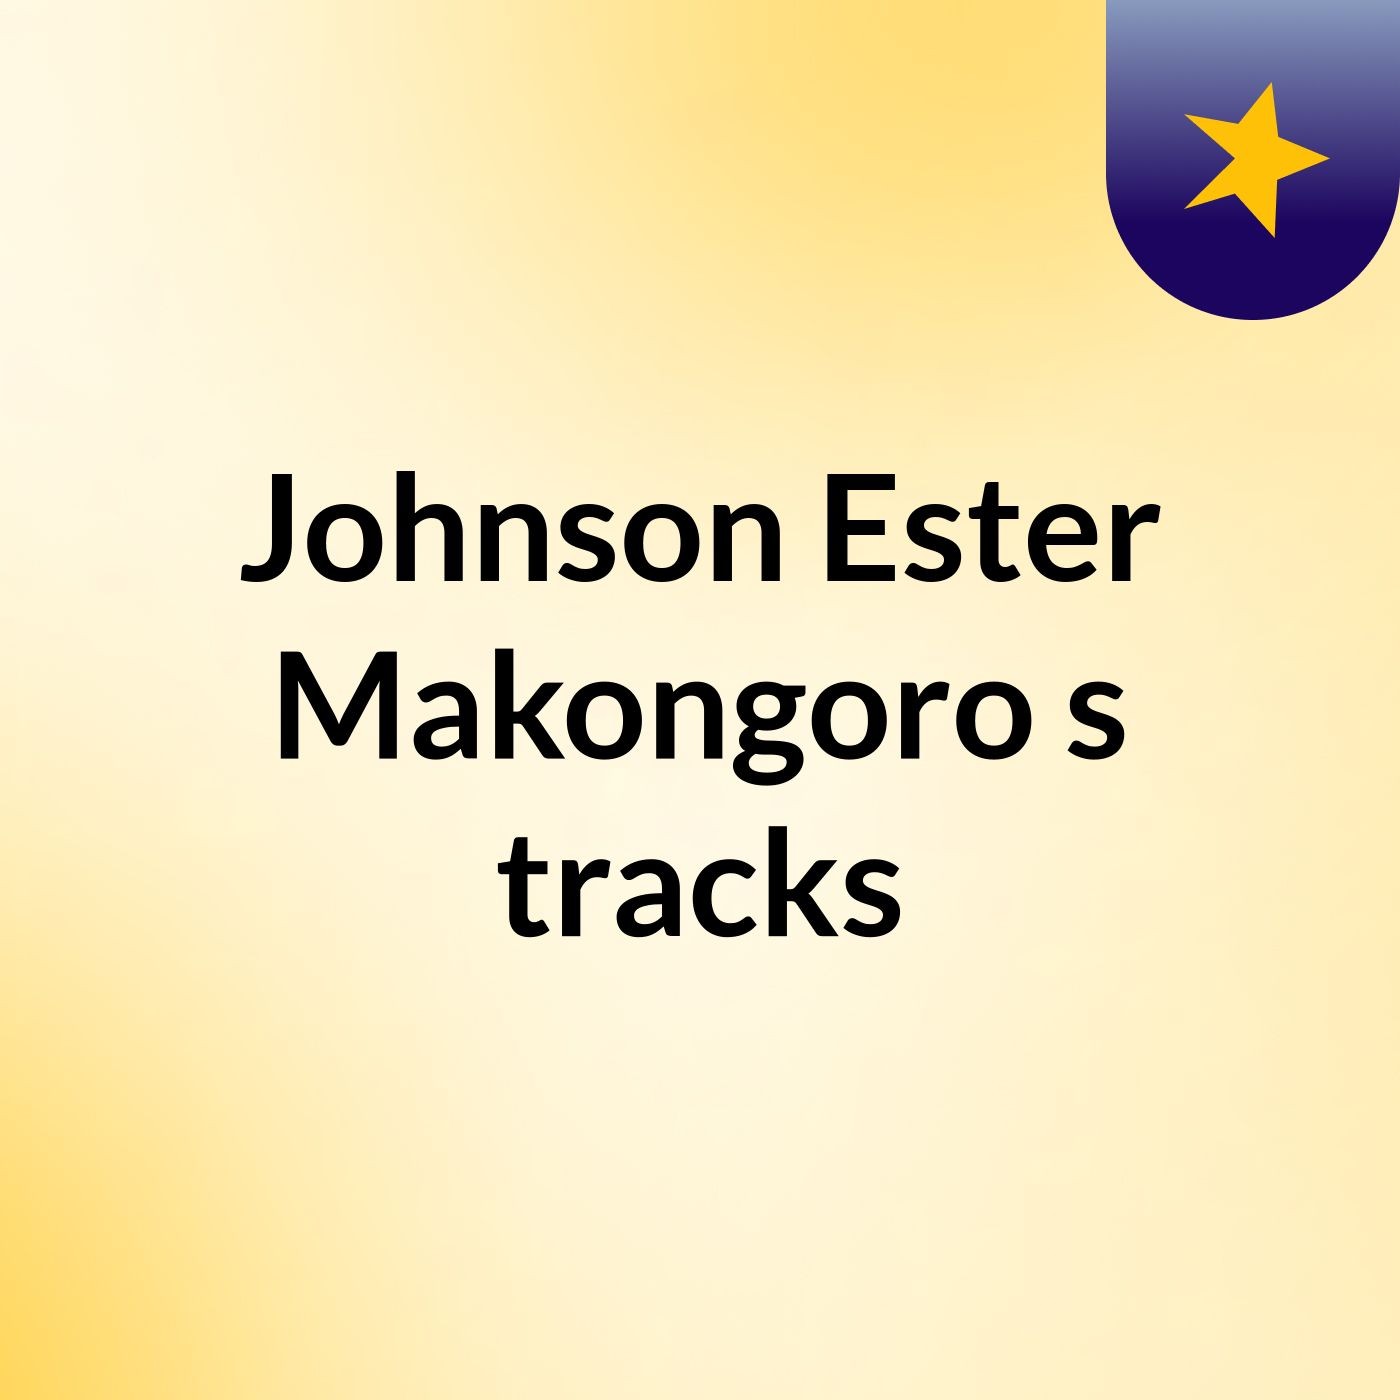 Johnson Ester Makongoro's tracks